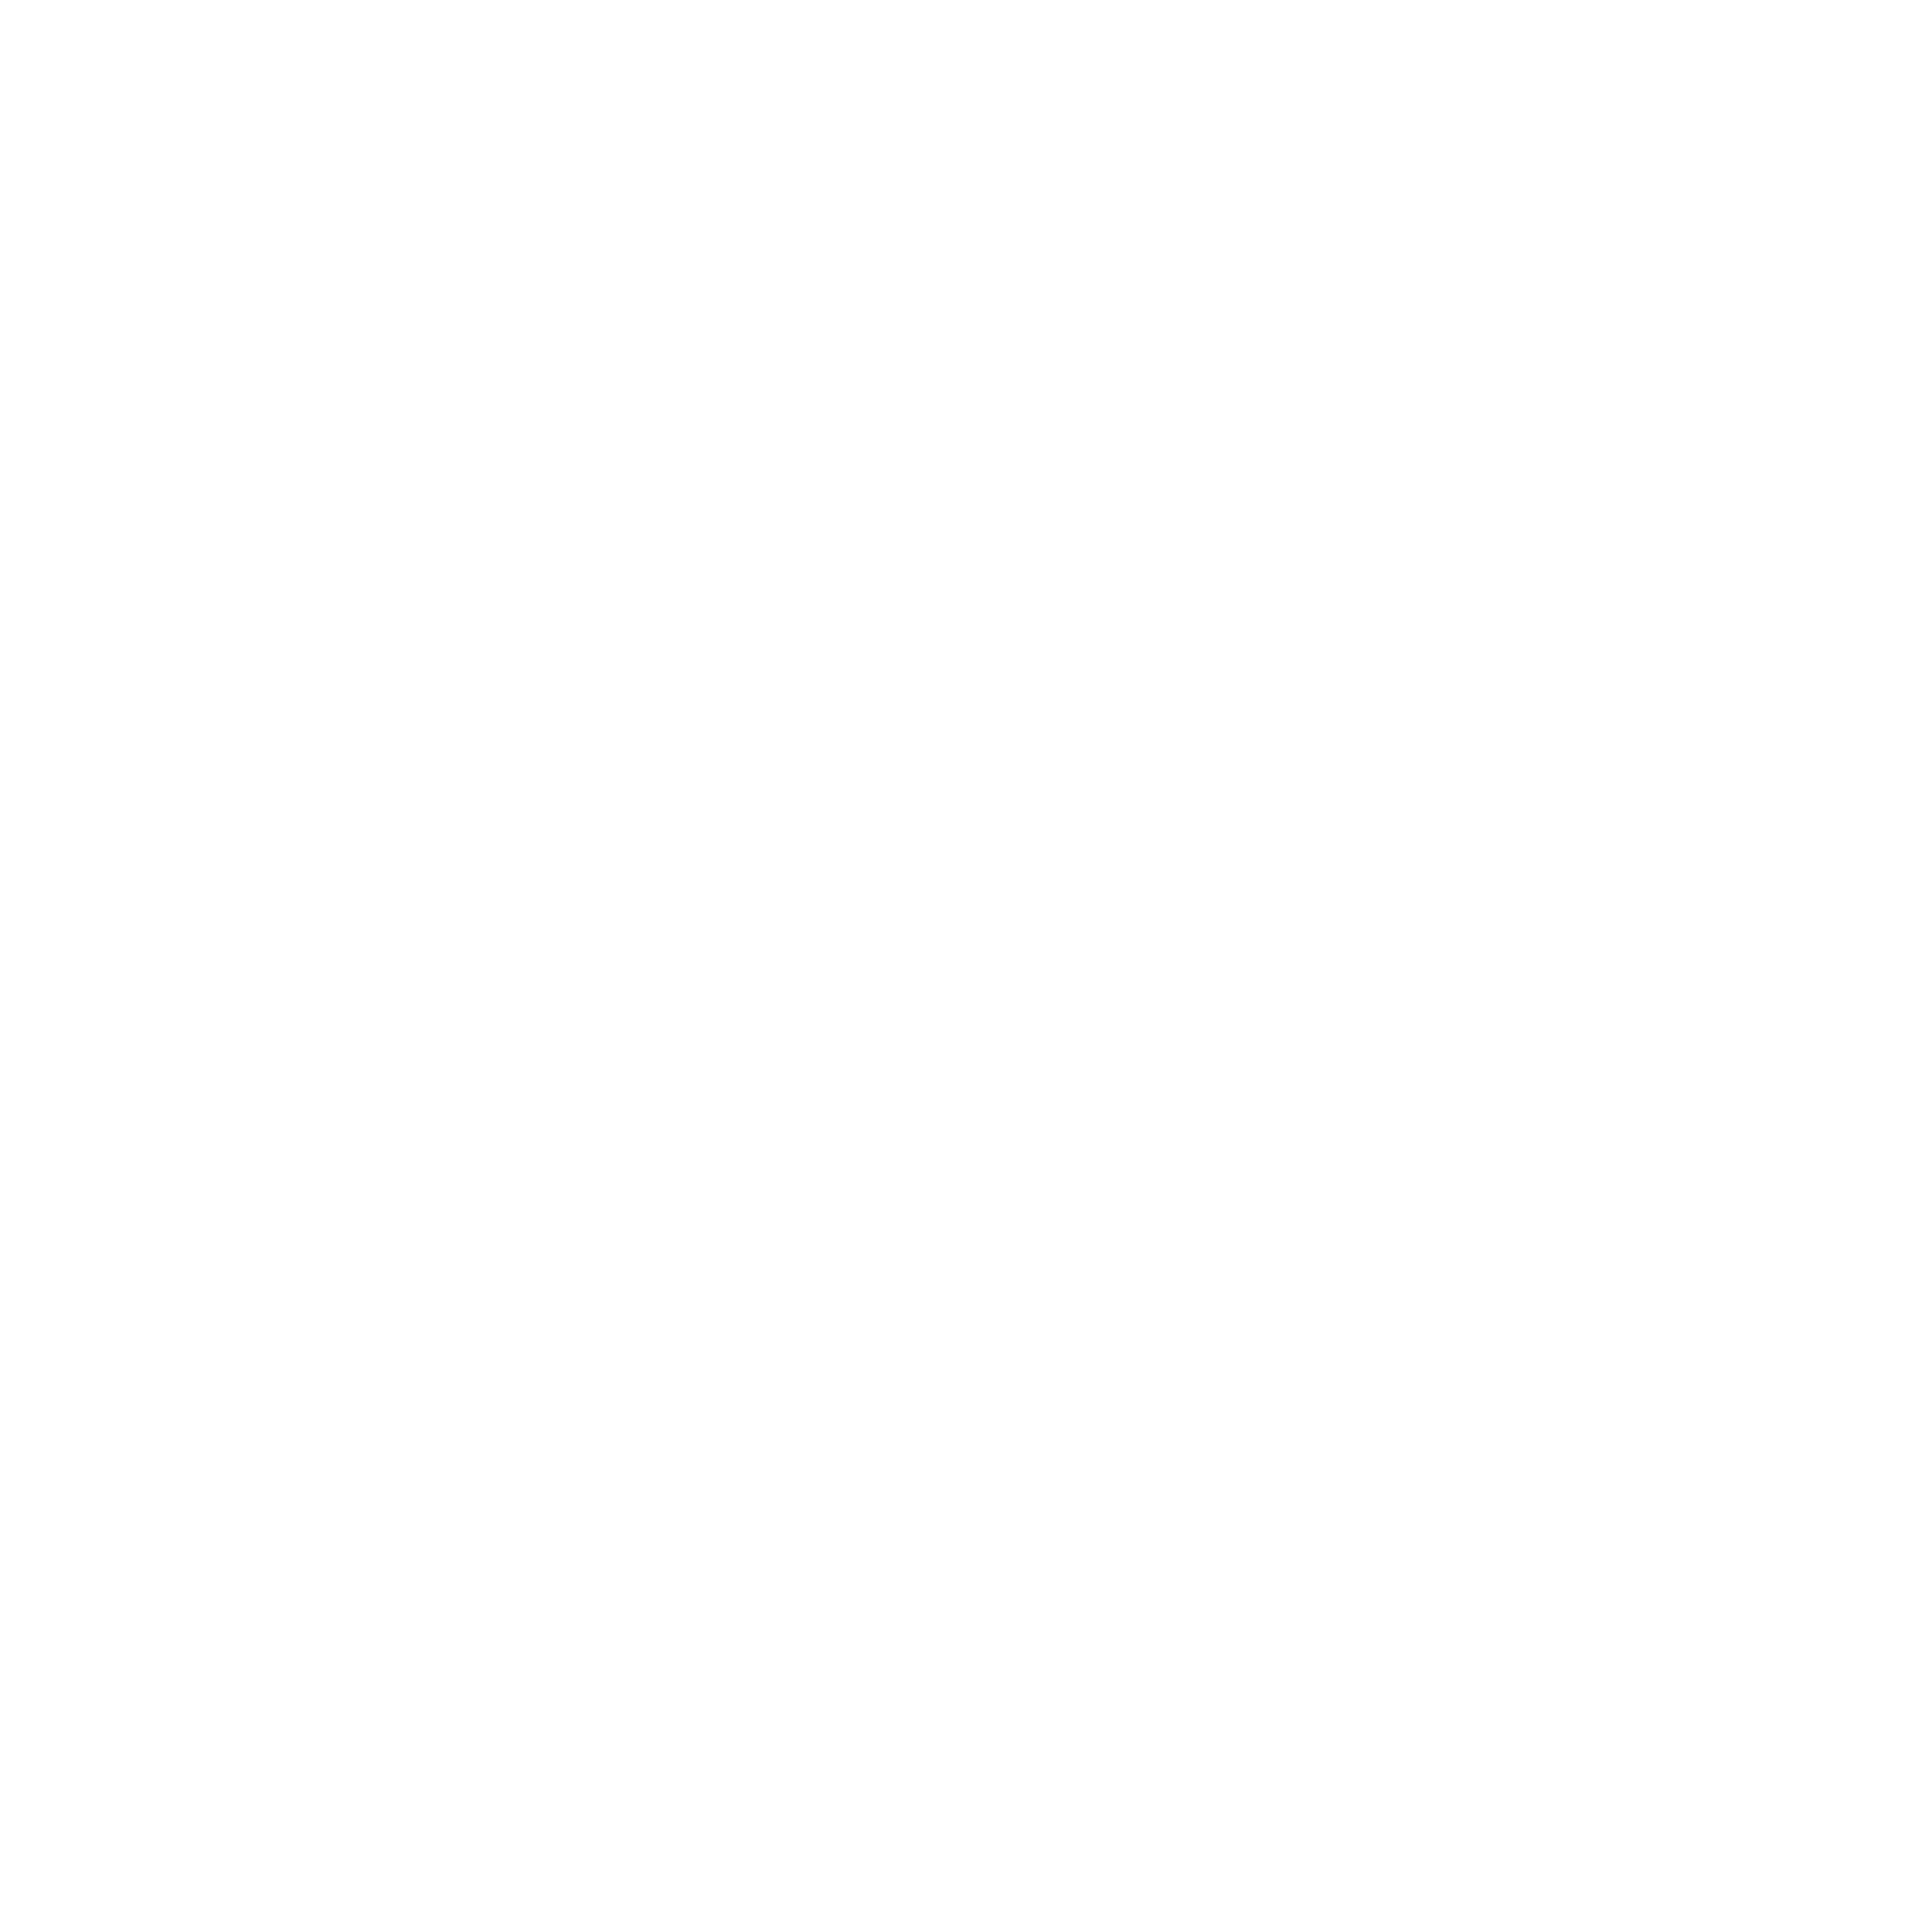 Peoples Community Bank Logo